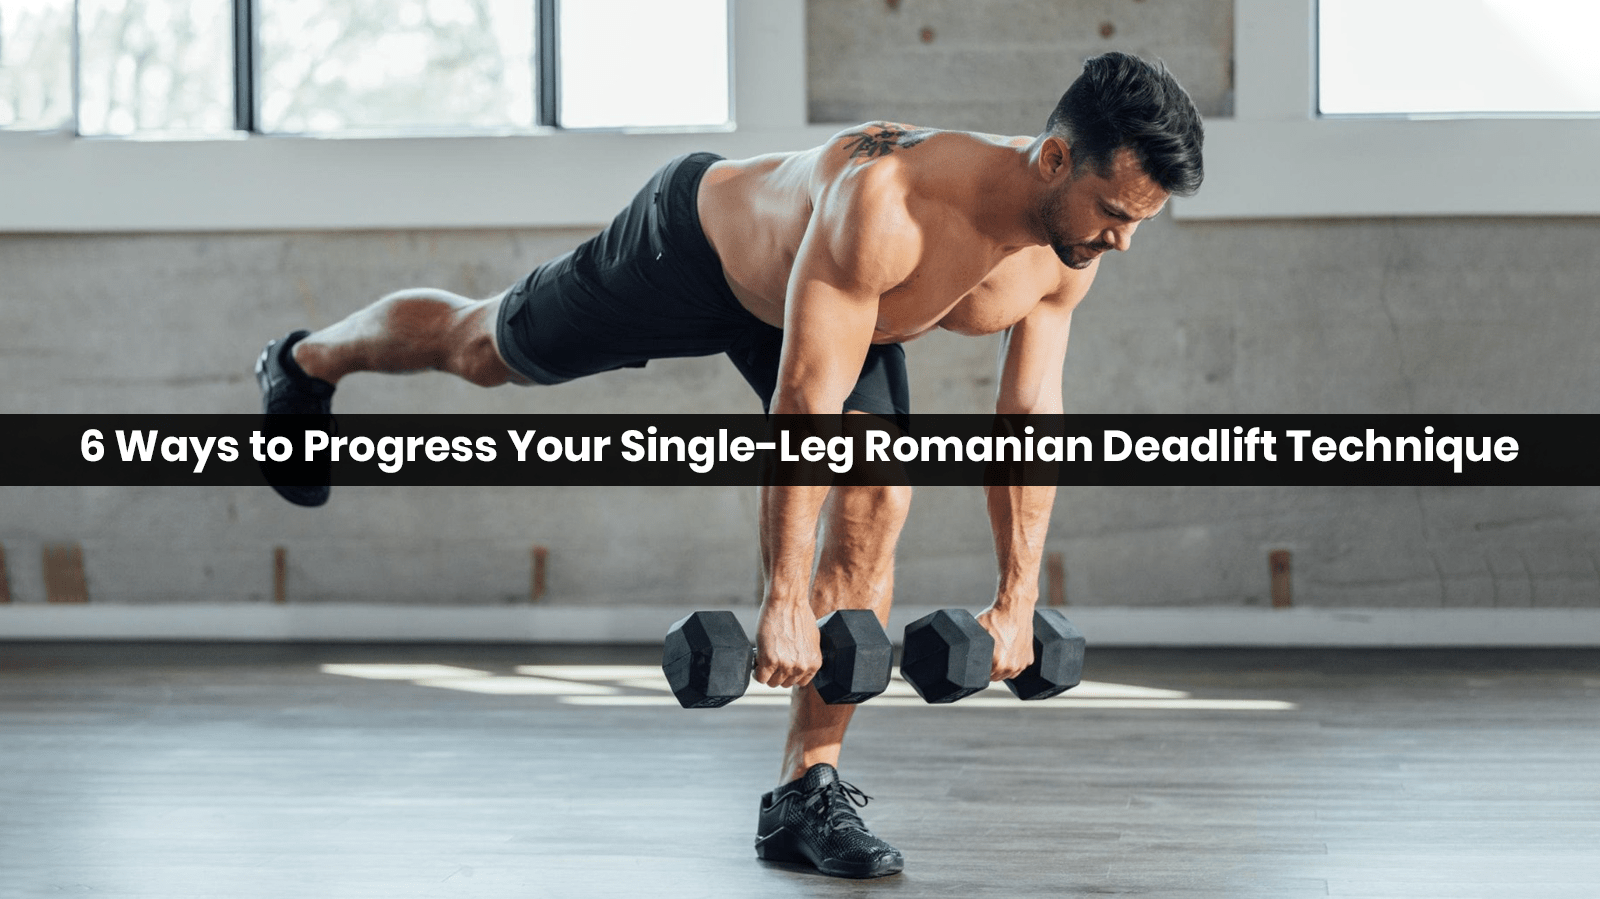 6 Ways to Progress Your Single-Leg Romanian Deadlift Technique